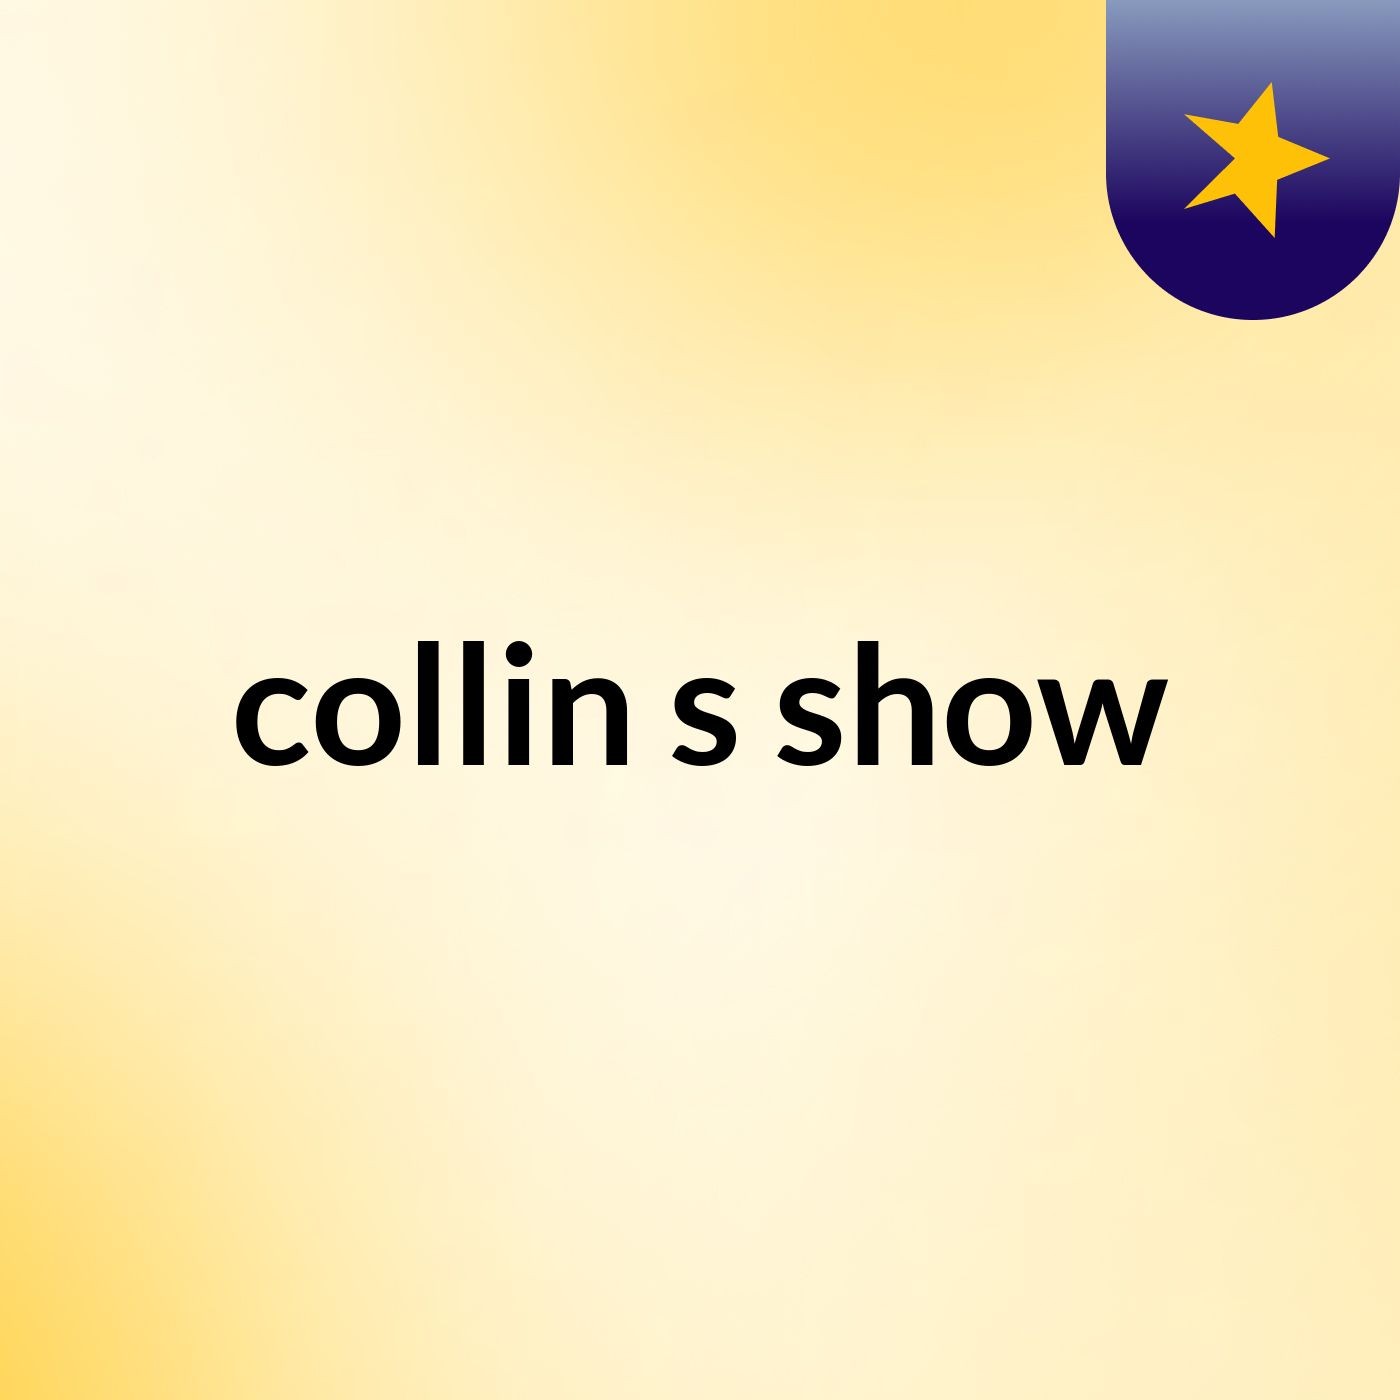 collin's show